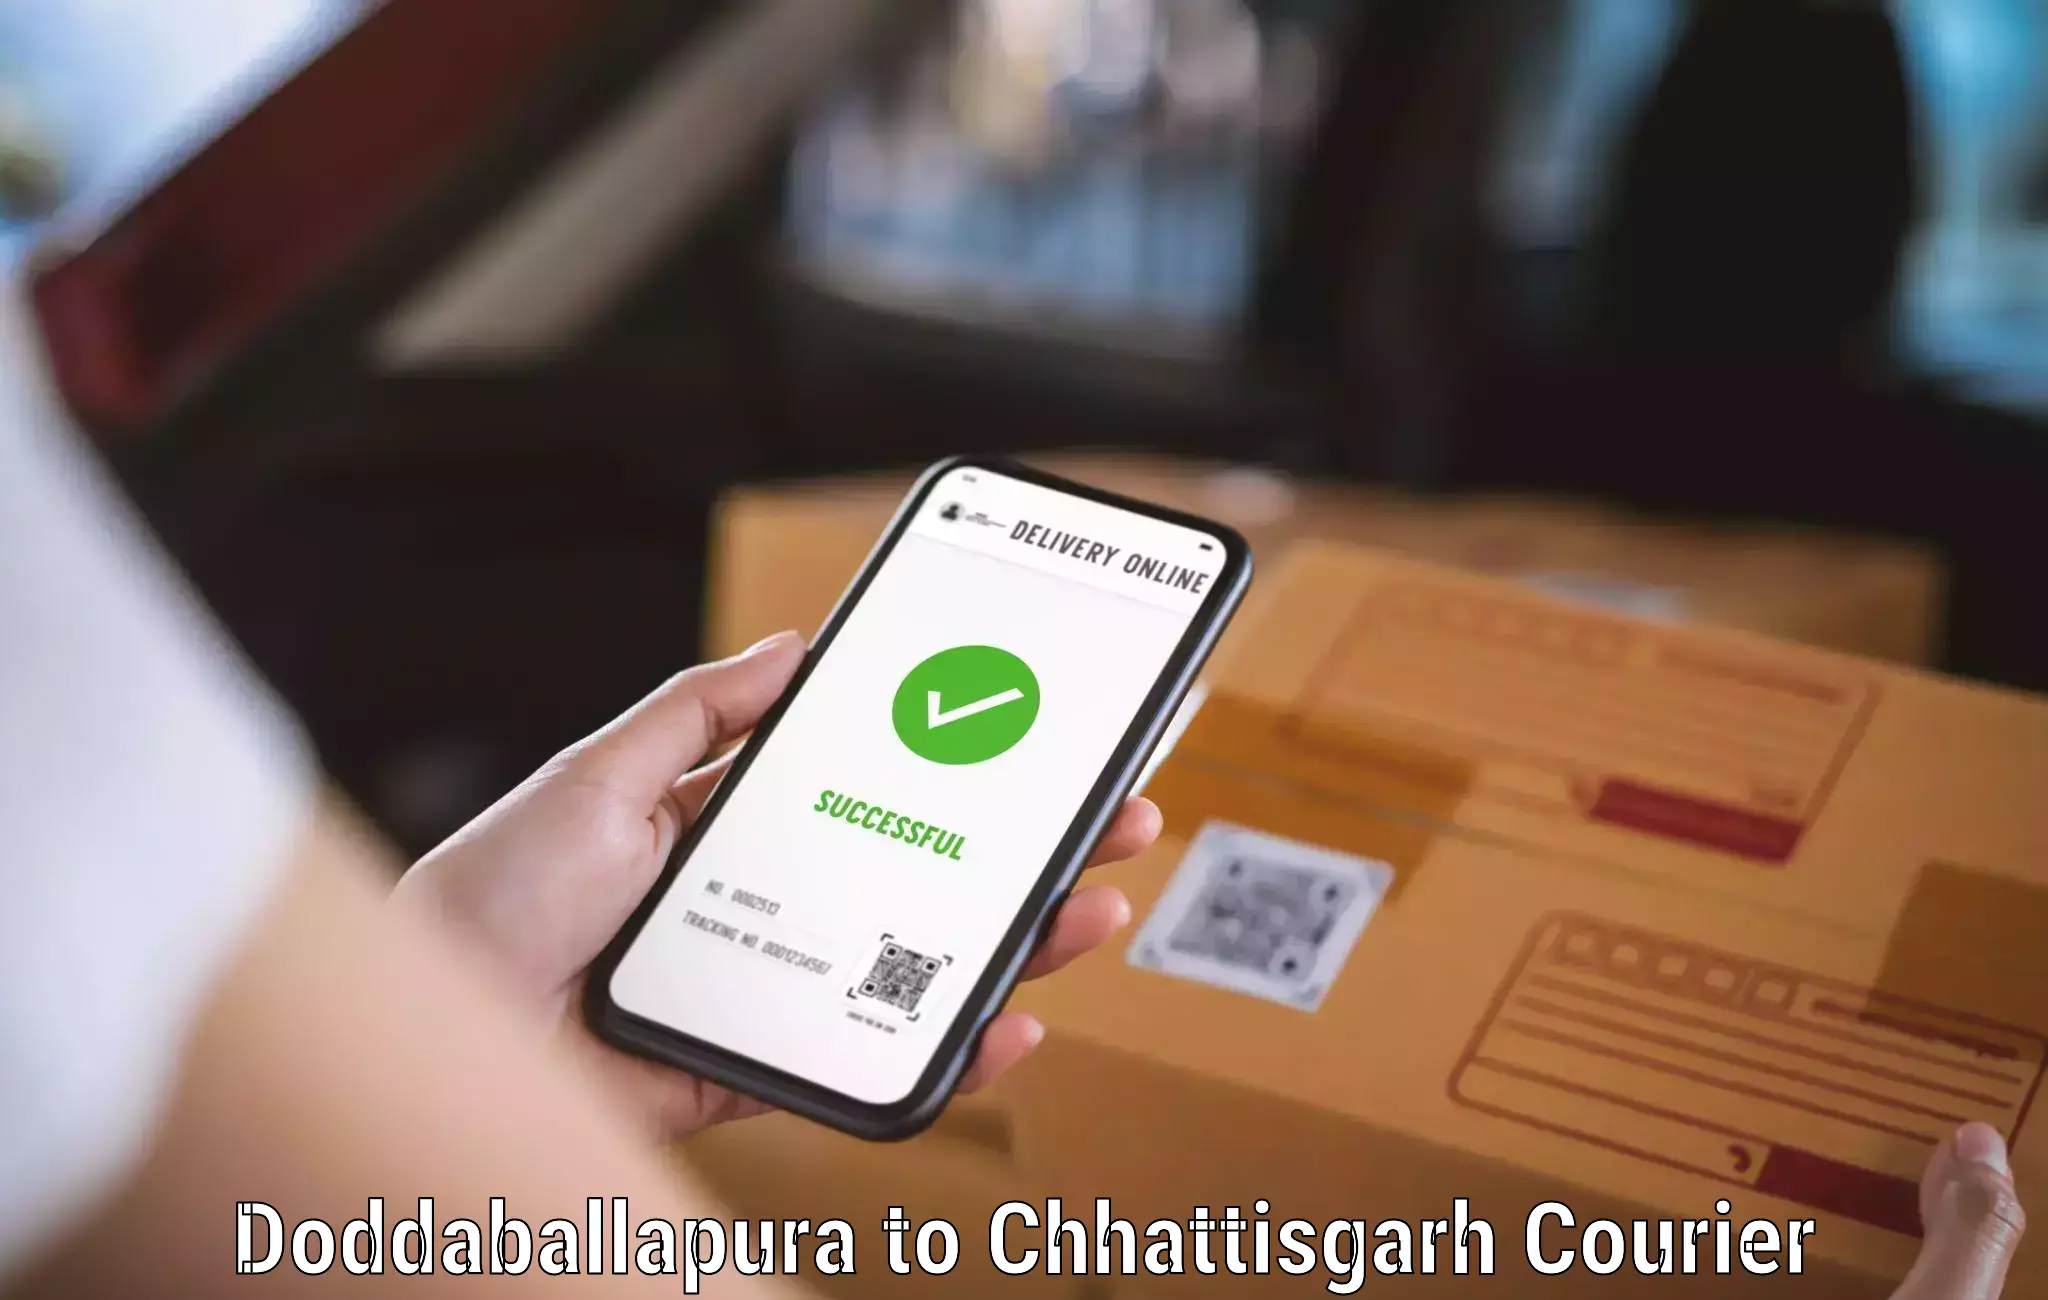 Global courier networks Doddaballapura to Bilaspur